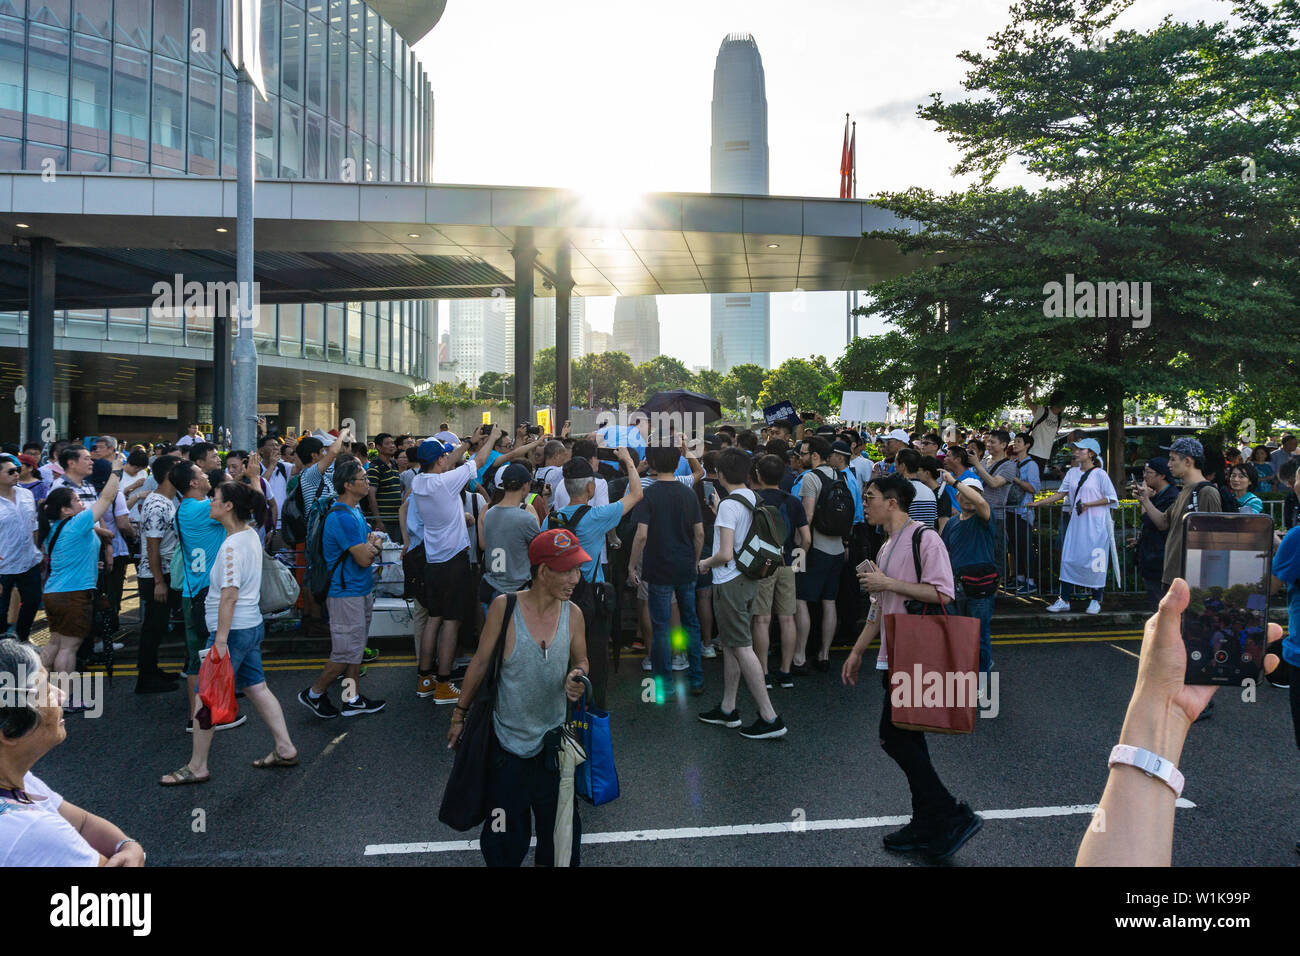 Handgemenge bei Hong Kong Protestaktion: pro Polizei Demonstranten Handgemenge mit anti Auslieferung Demonstranten Stockfoto